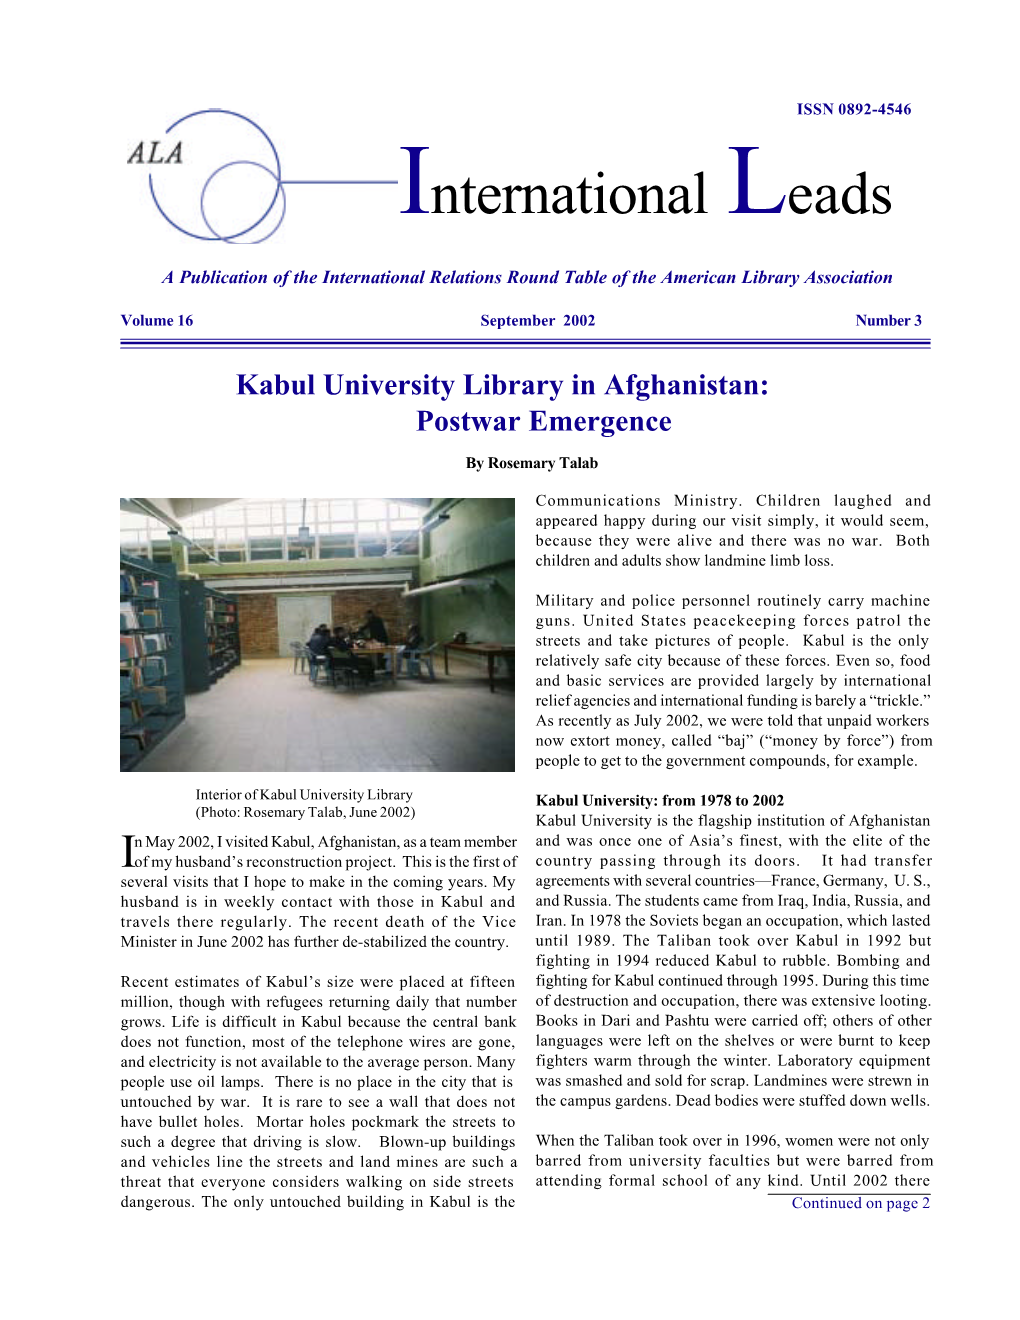 Kabul University Library in Afghanistan: Postwar Emergence